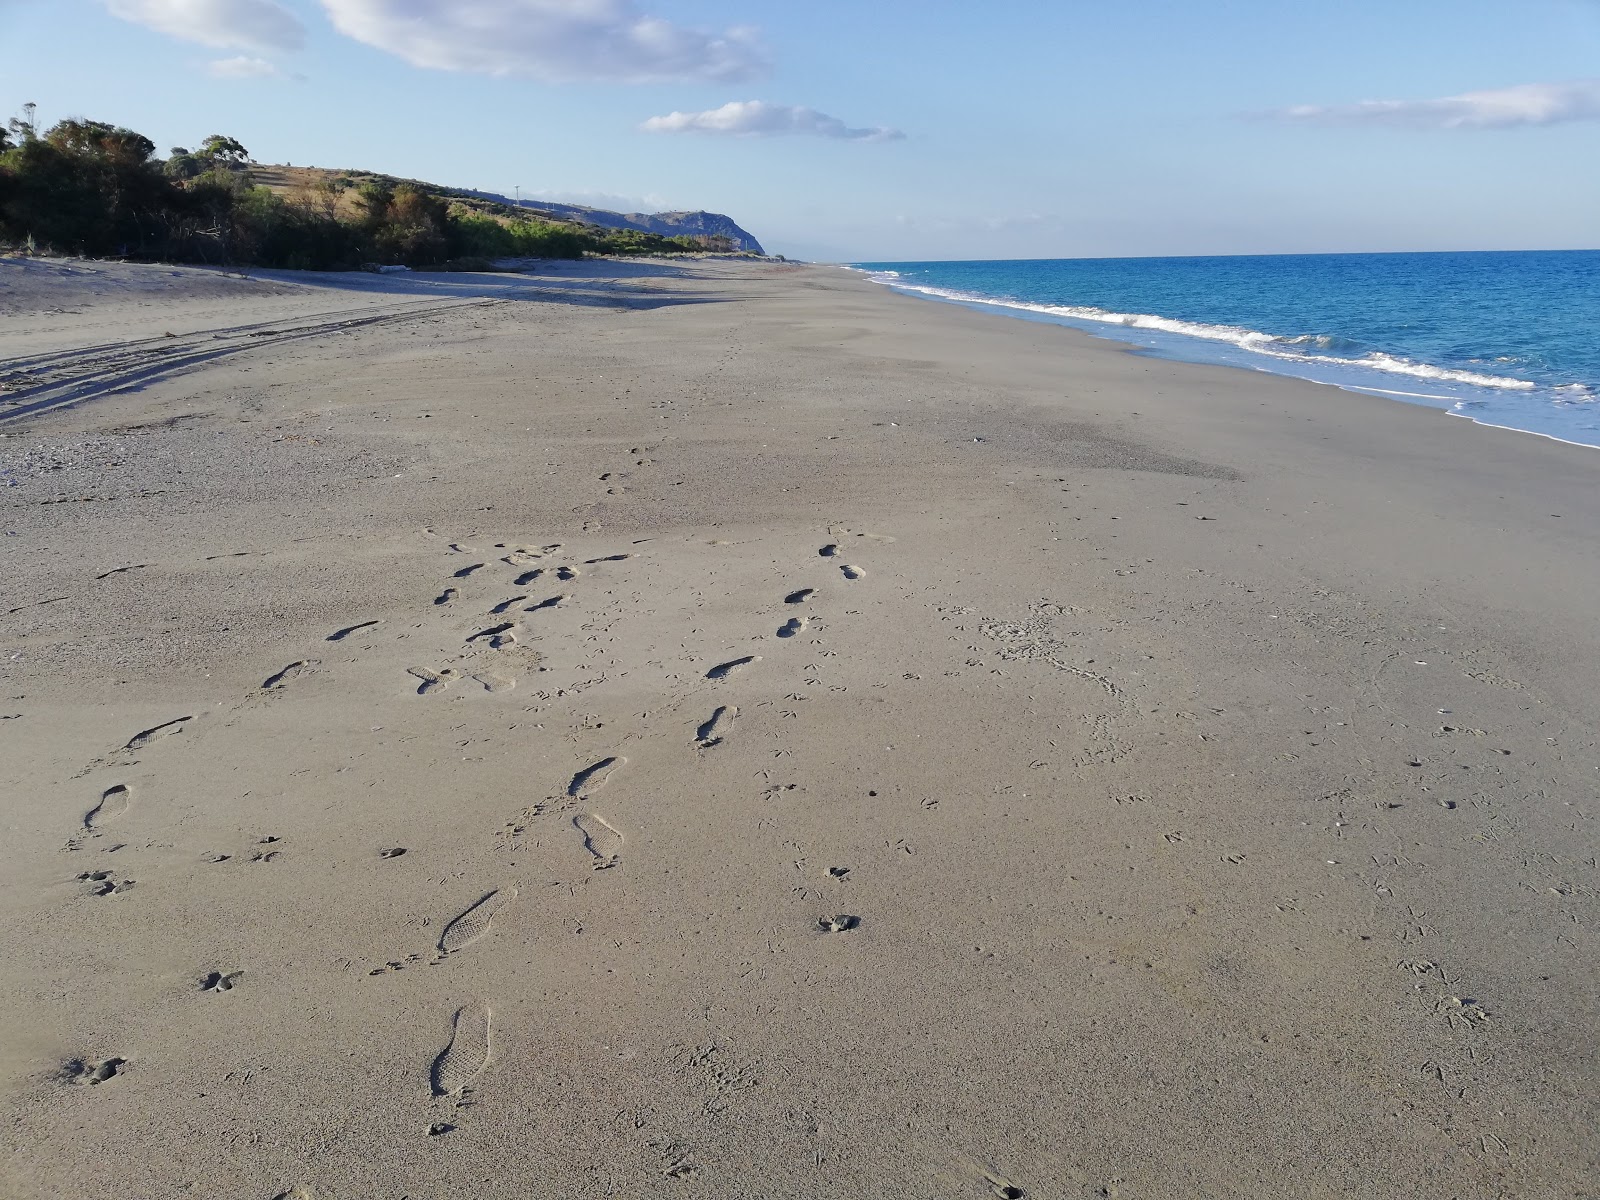 Fotografie cu Spiaggia dello Scoglio Cuzzufri cu o suprafață de nisip gri